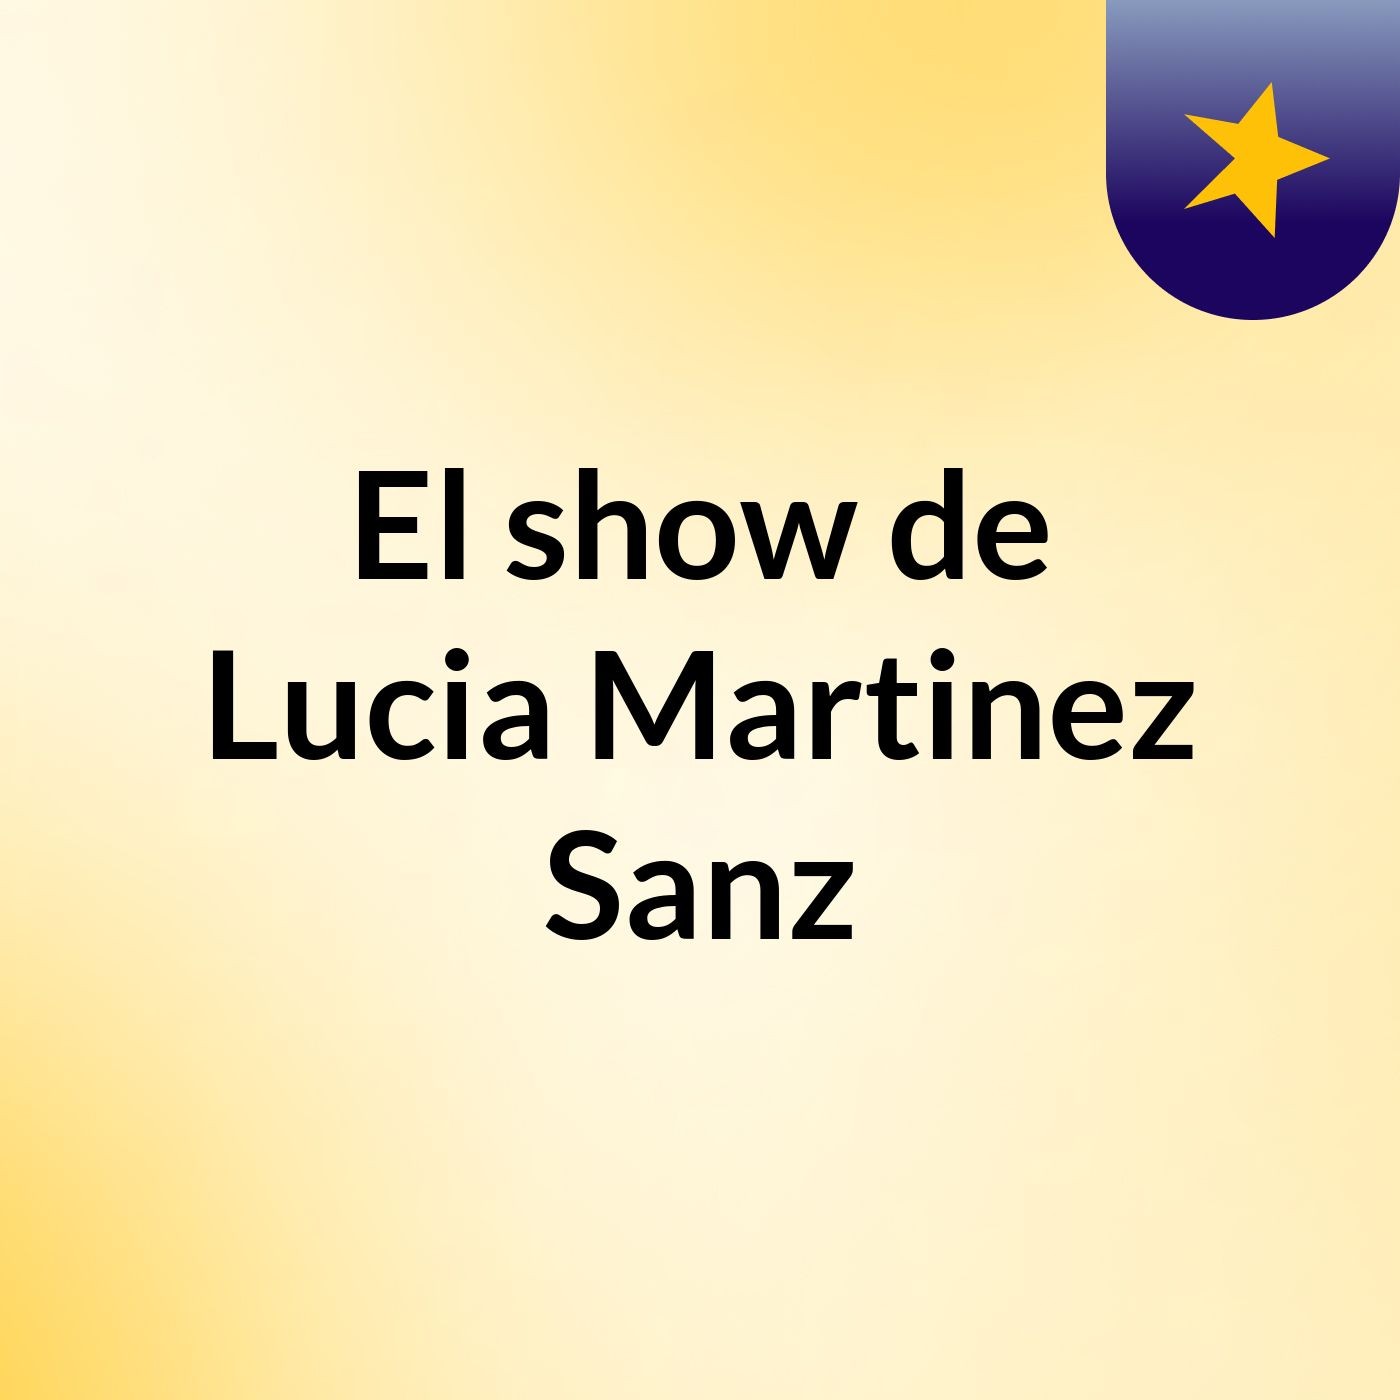 El show de Lucia Martinez Sanz